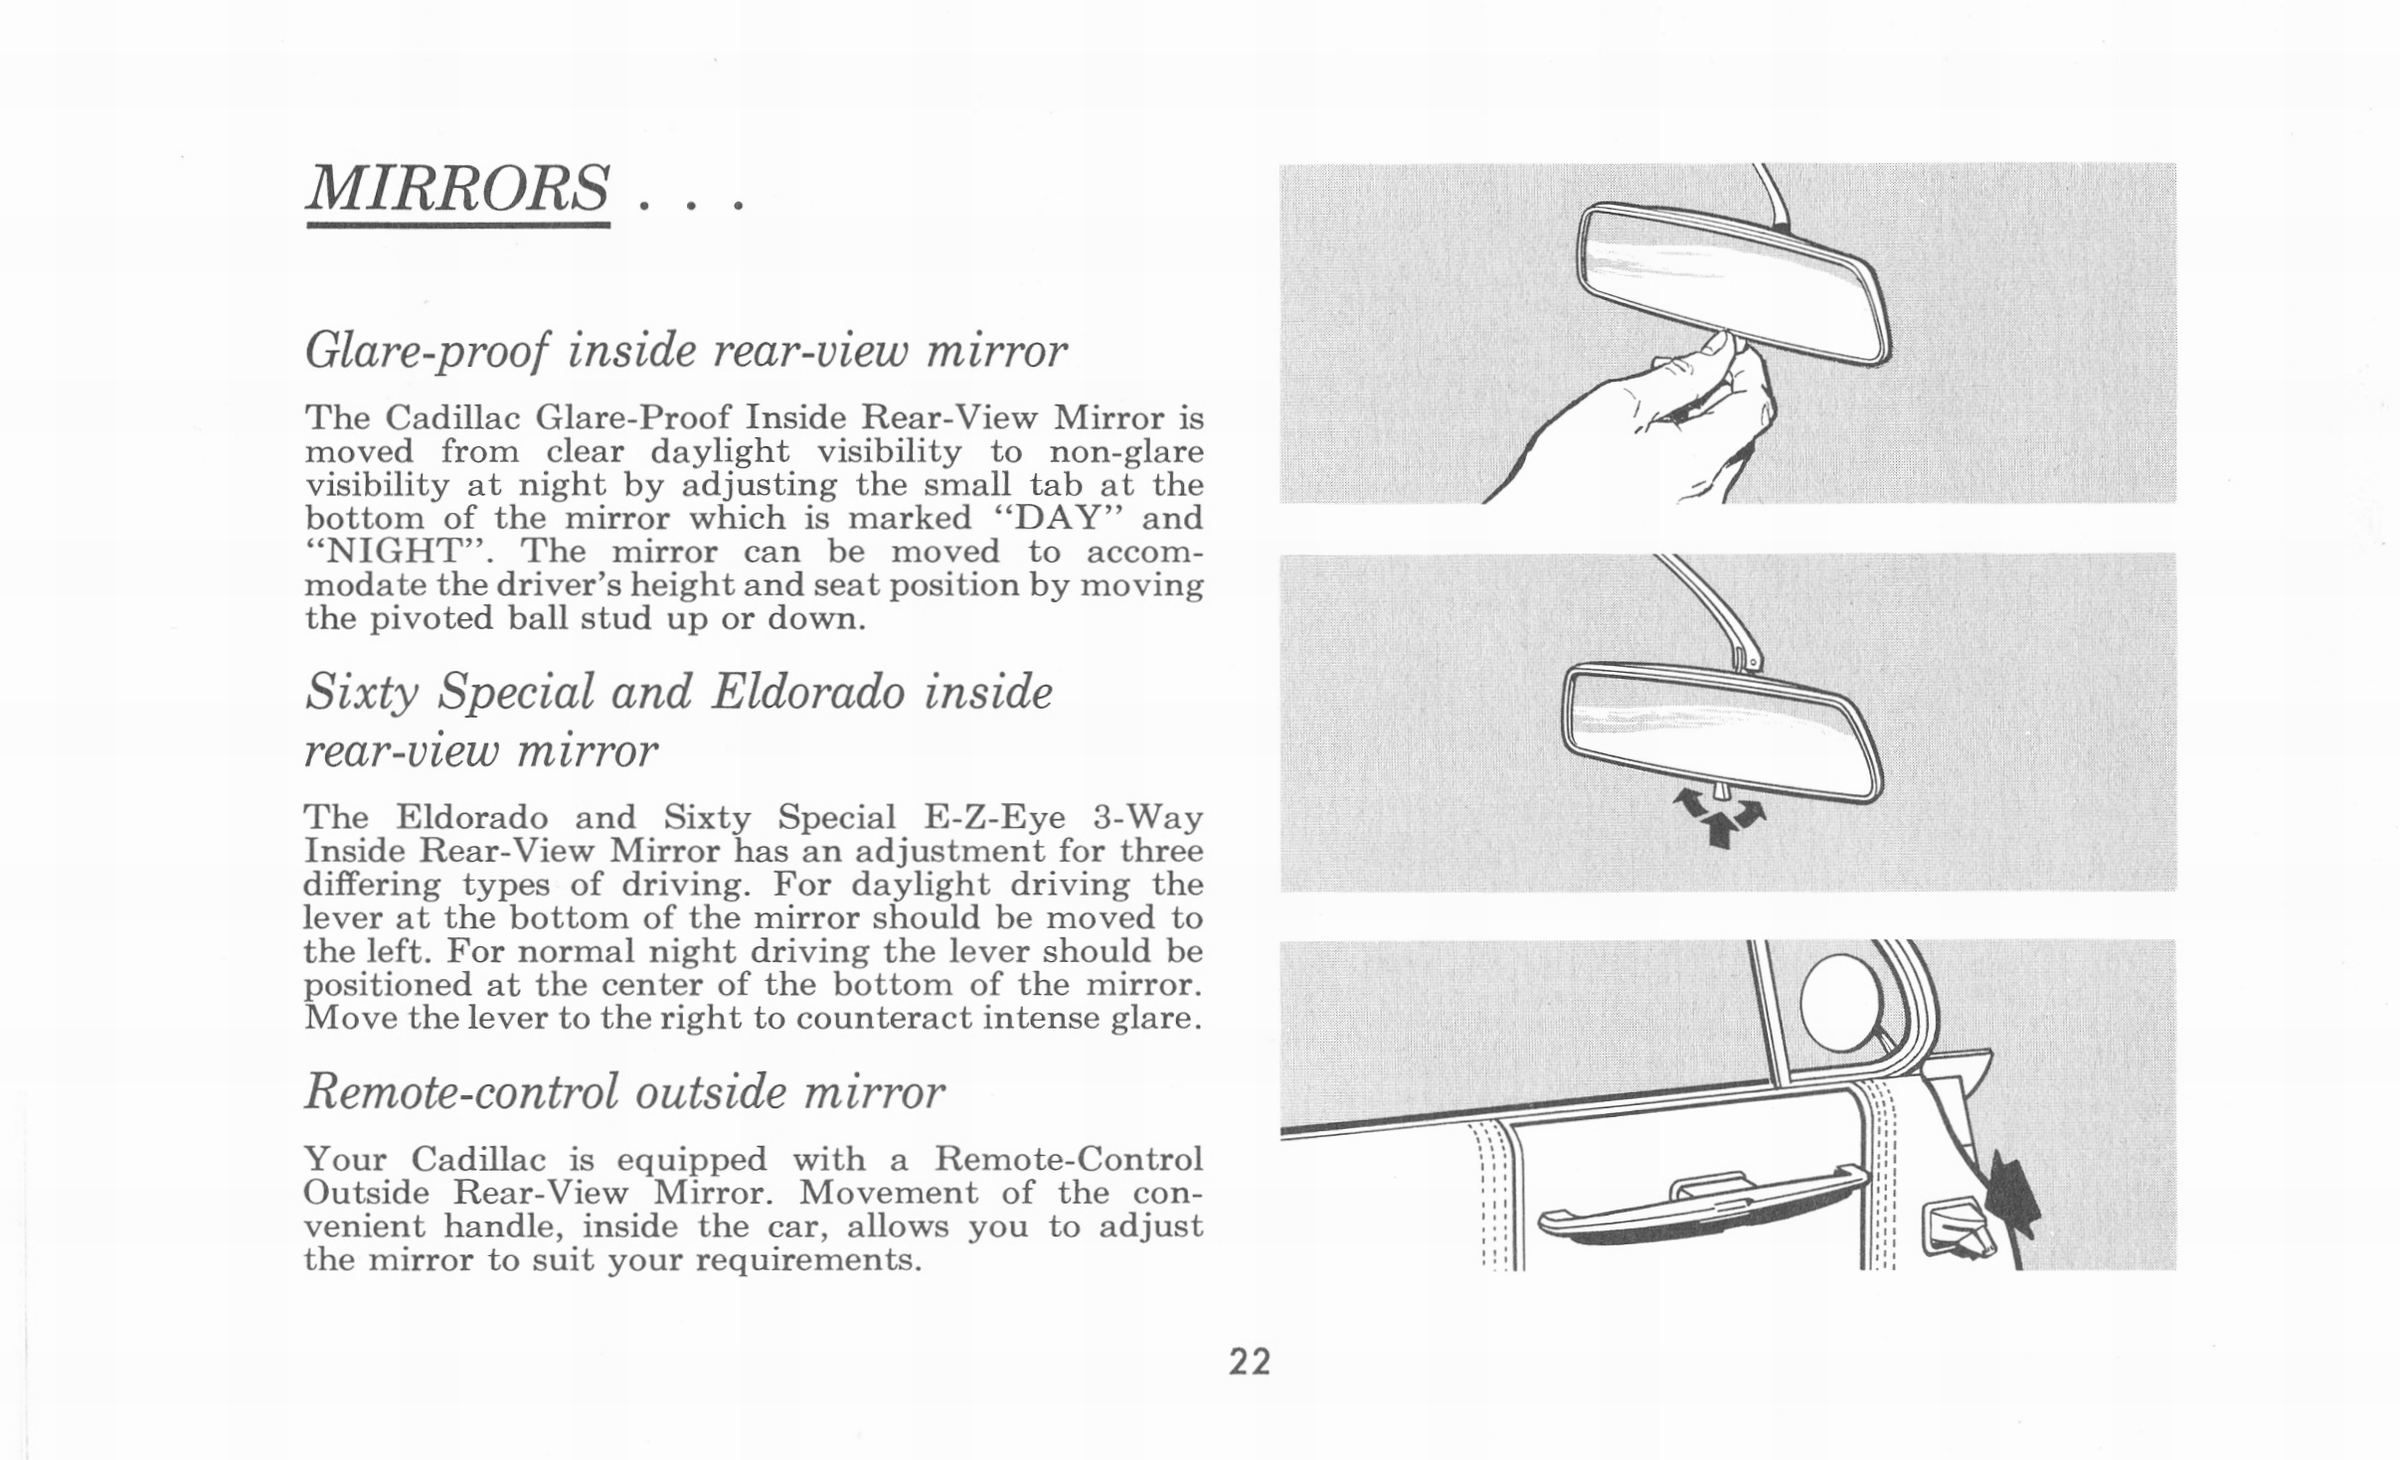 n_1962 Cadillac Owner's Manual-Page 22.jpg